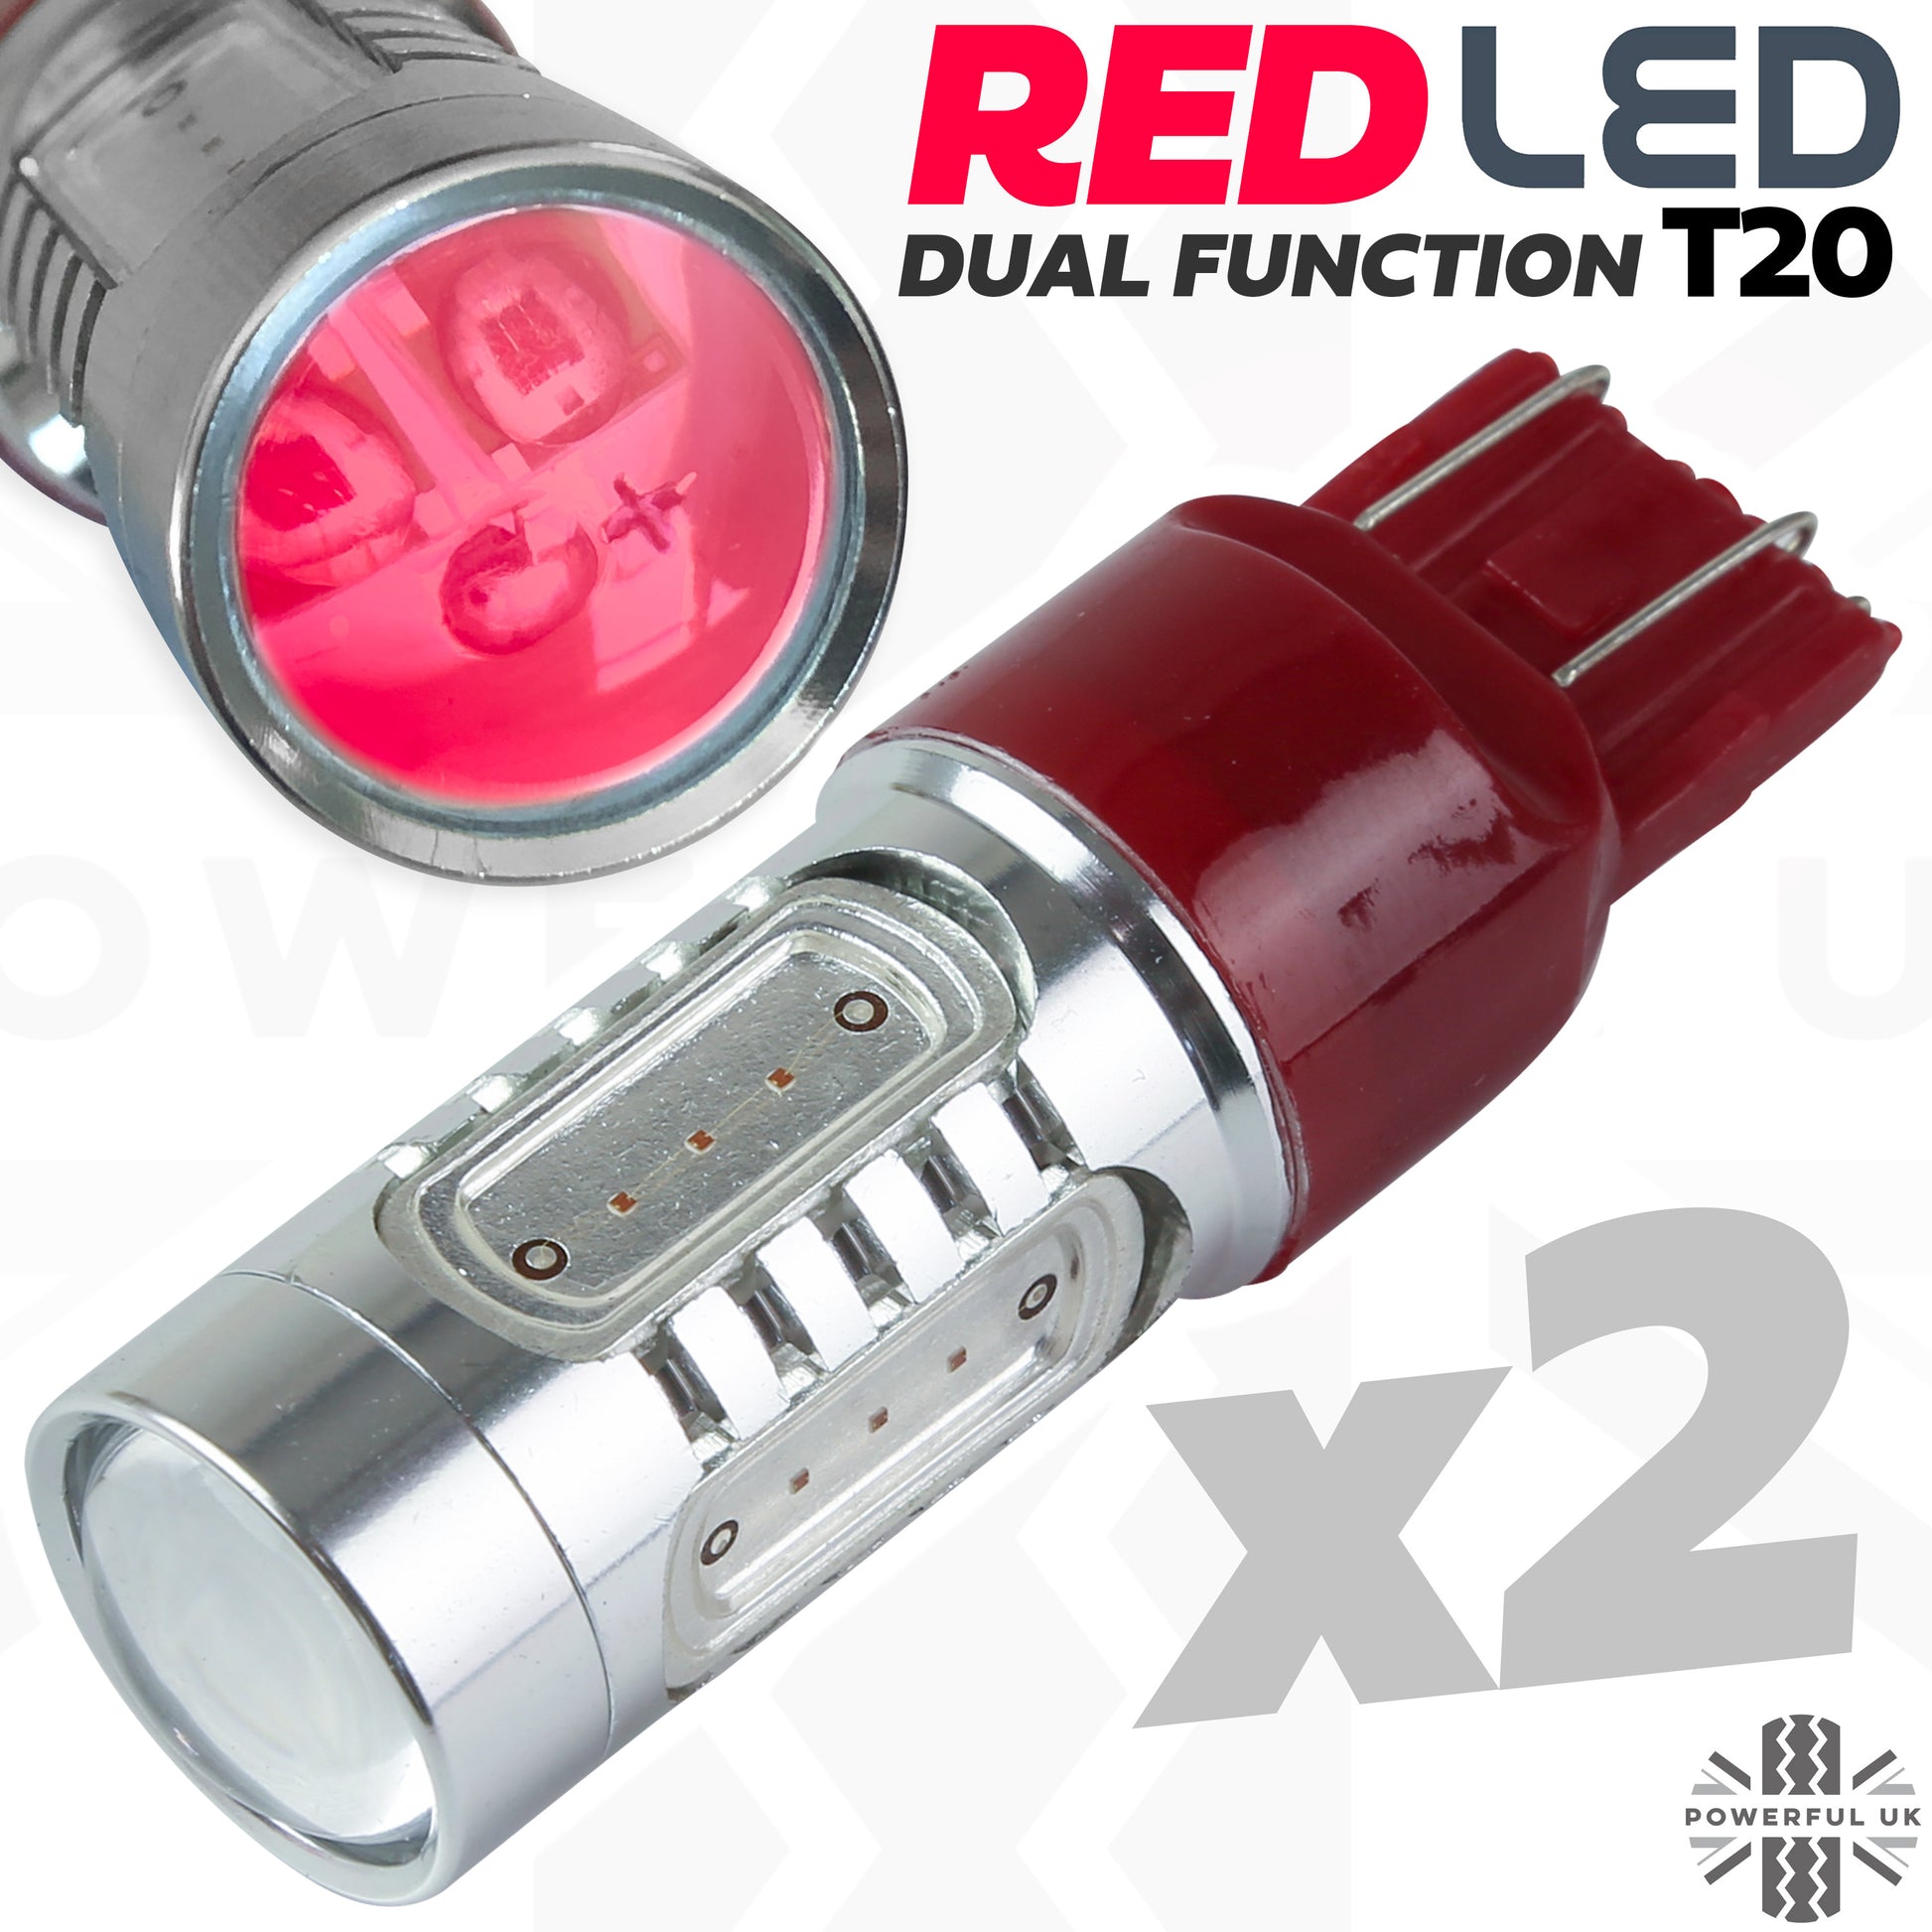 Katur 2x T20 7443 LED Car Light Bulbs Used For Brake Stop Tail Lamp Red Led  12v T20 Size W21/5W W3 x 16q Base For DRL Function - AliExpress